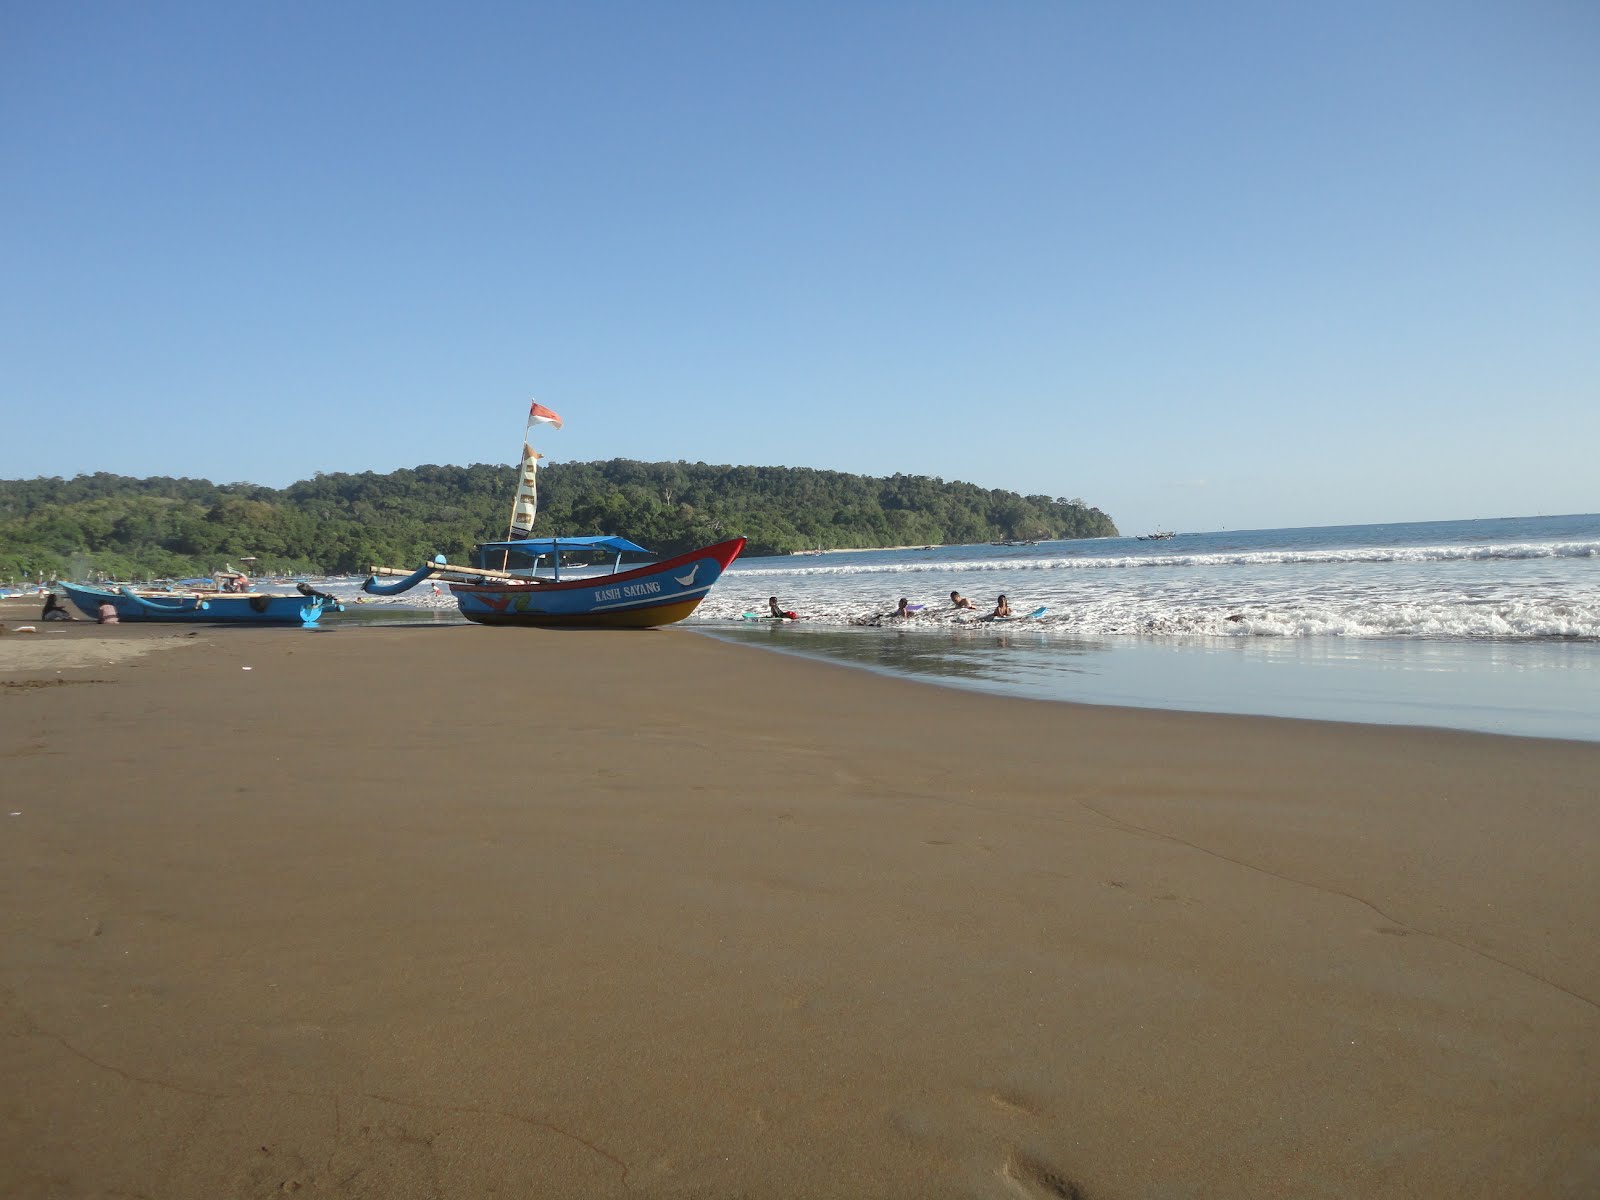  Pantai Pangandaran yanPangandaran